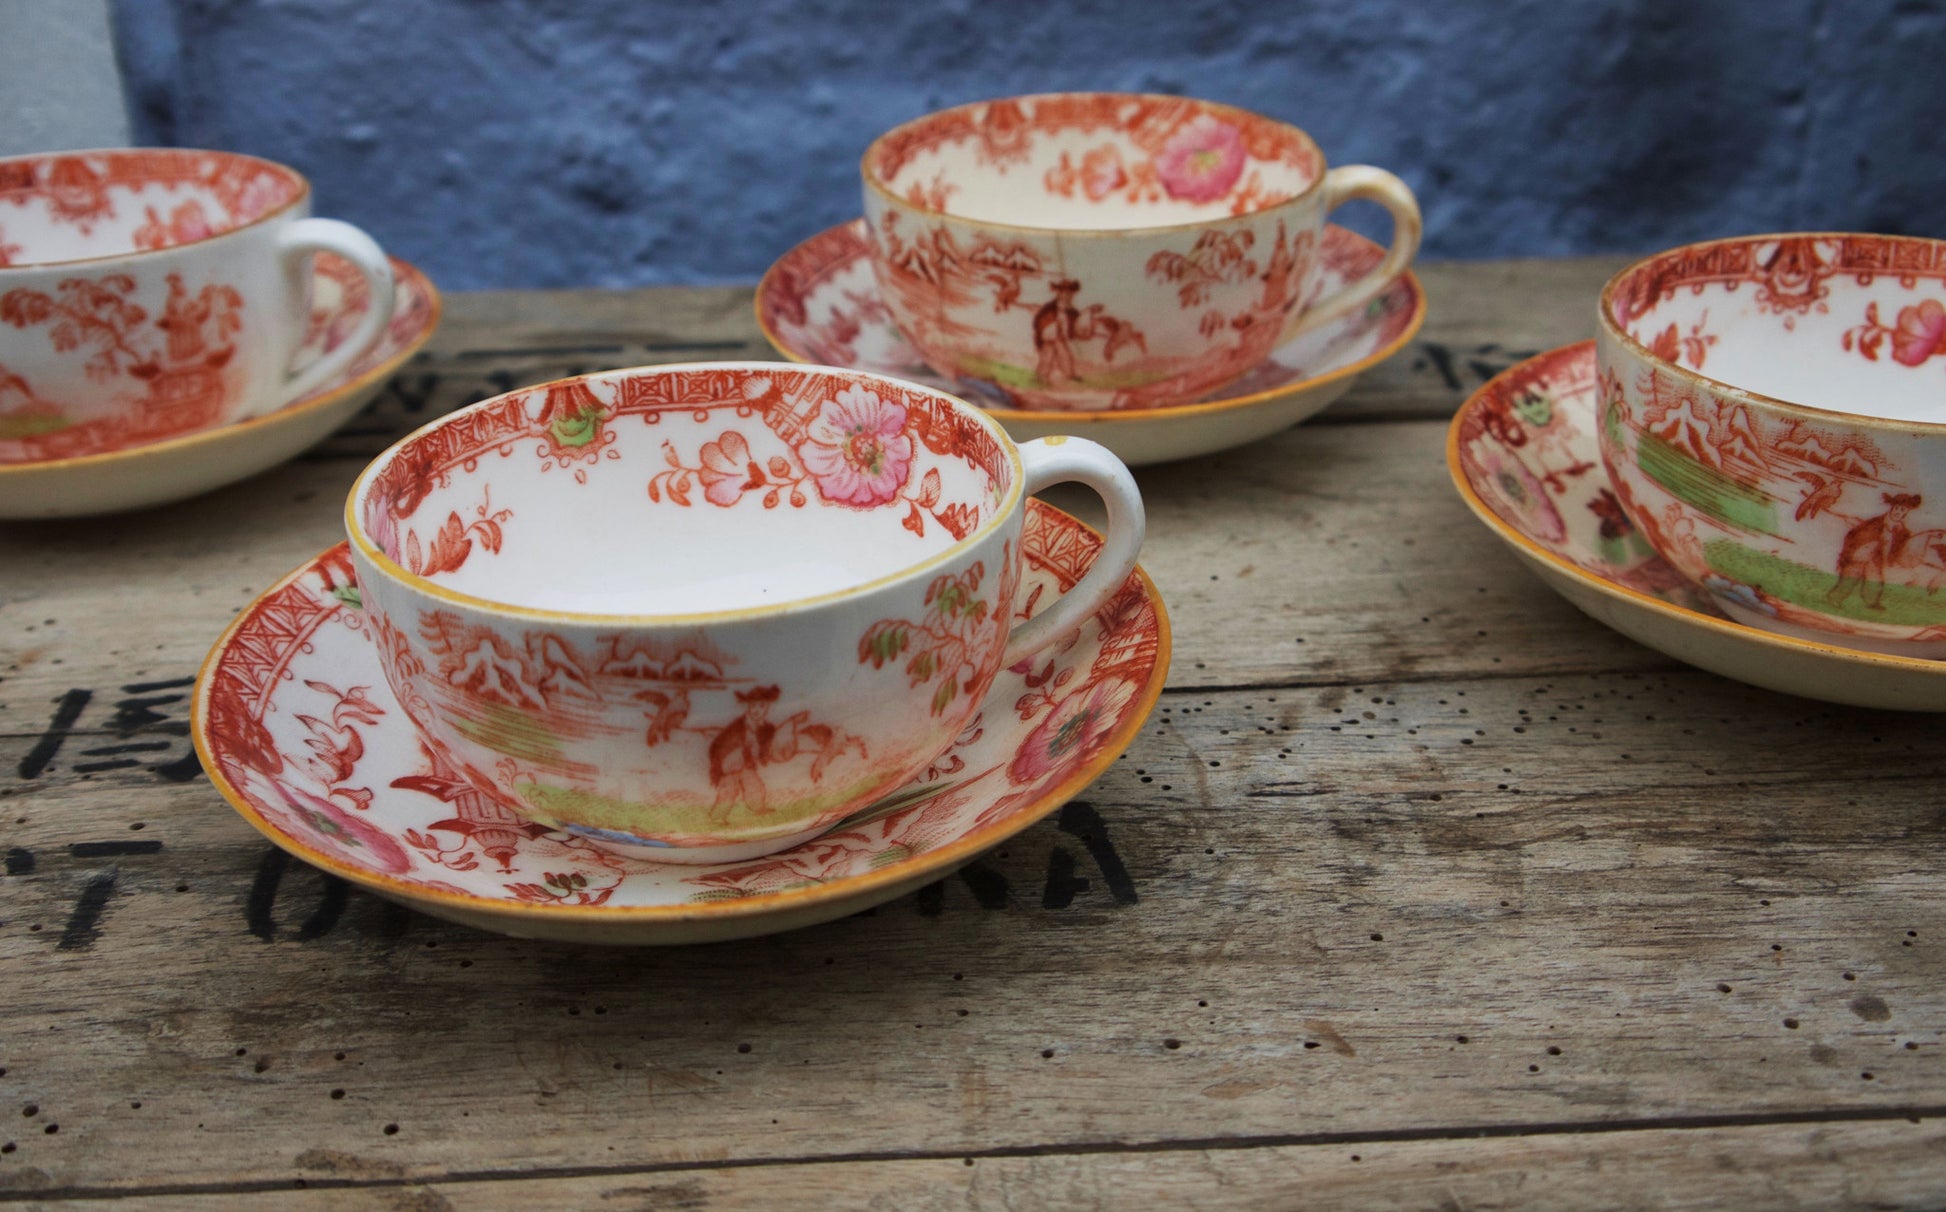 Stunning vintage staffordshire bone china tea set with chinese design 1920's